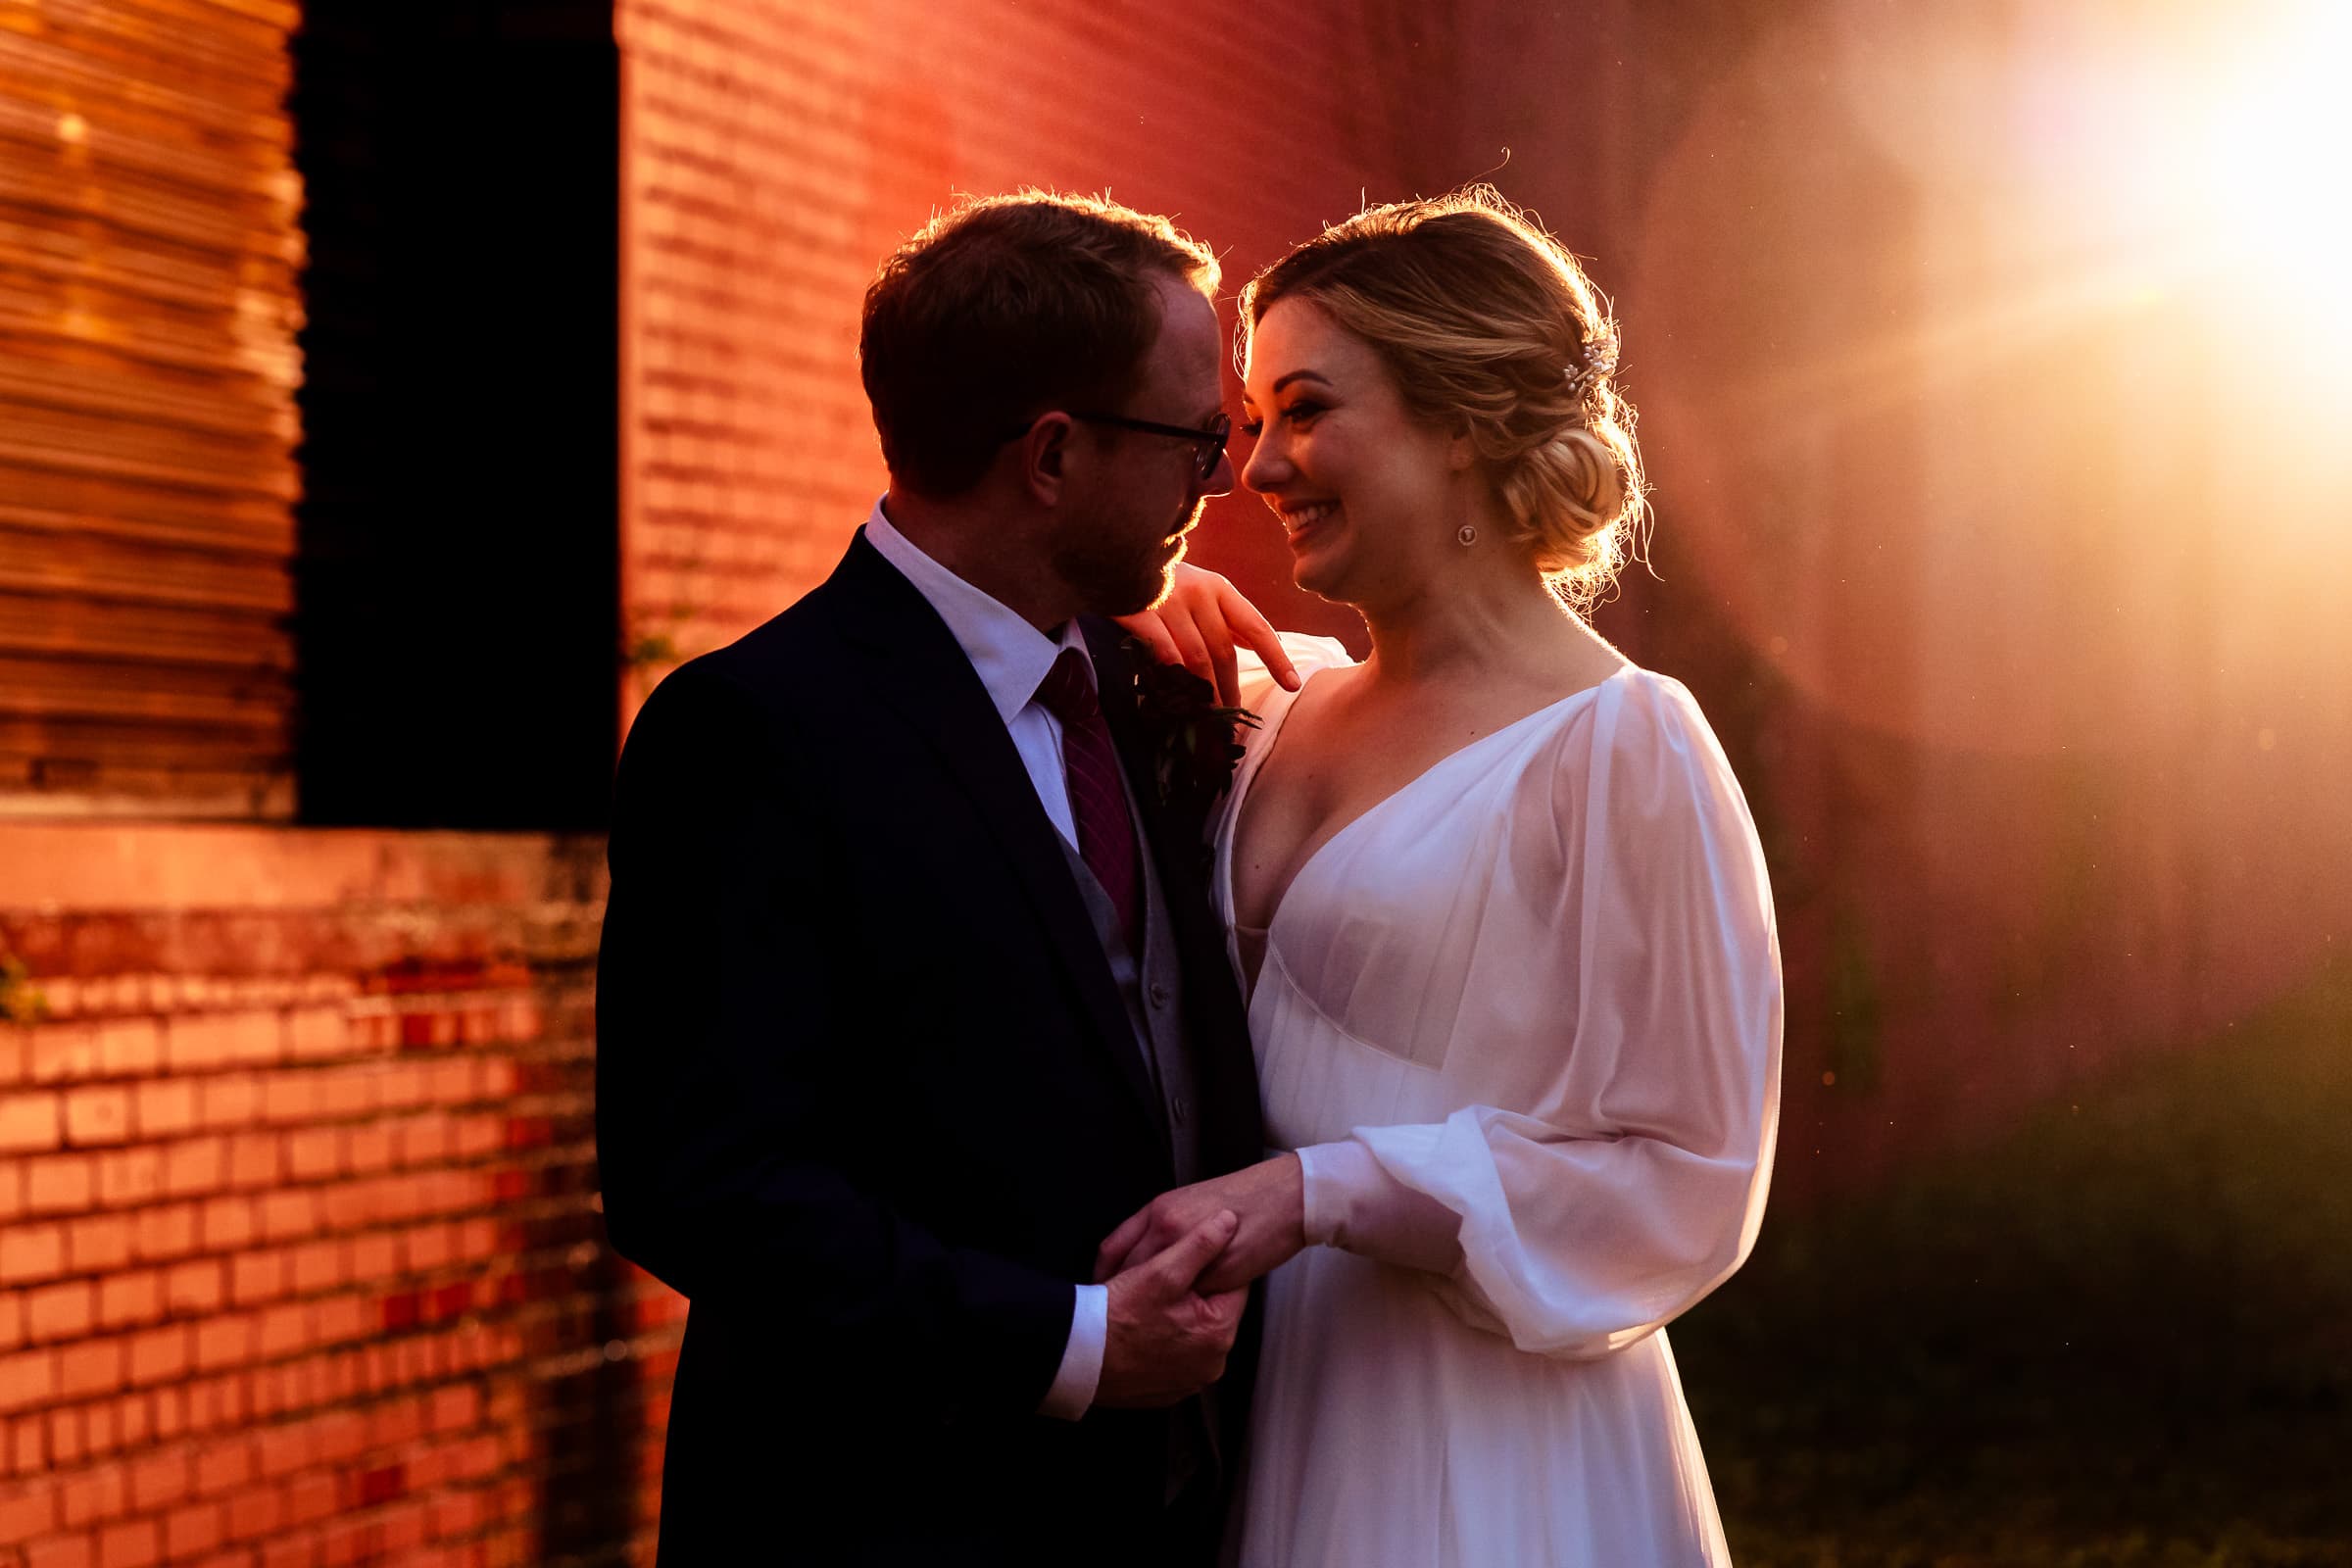 Golden Hour wedding portrait at Historic Raleigh venue | photos by Kivus & Camera